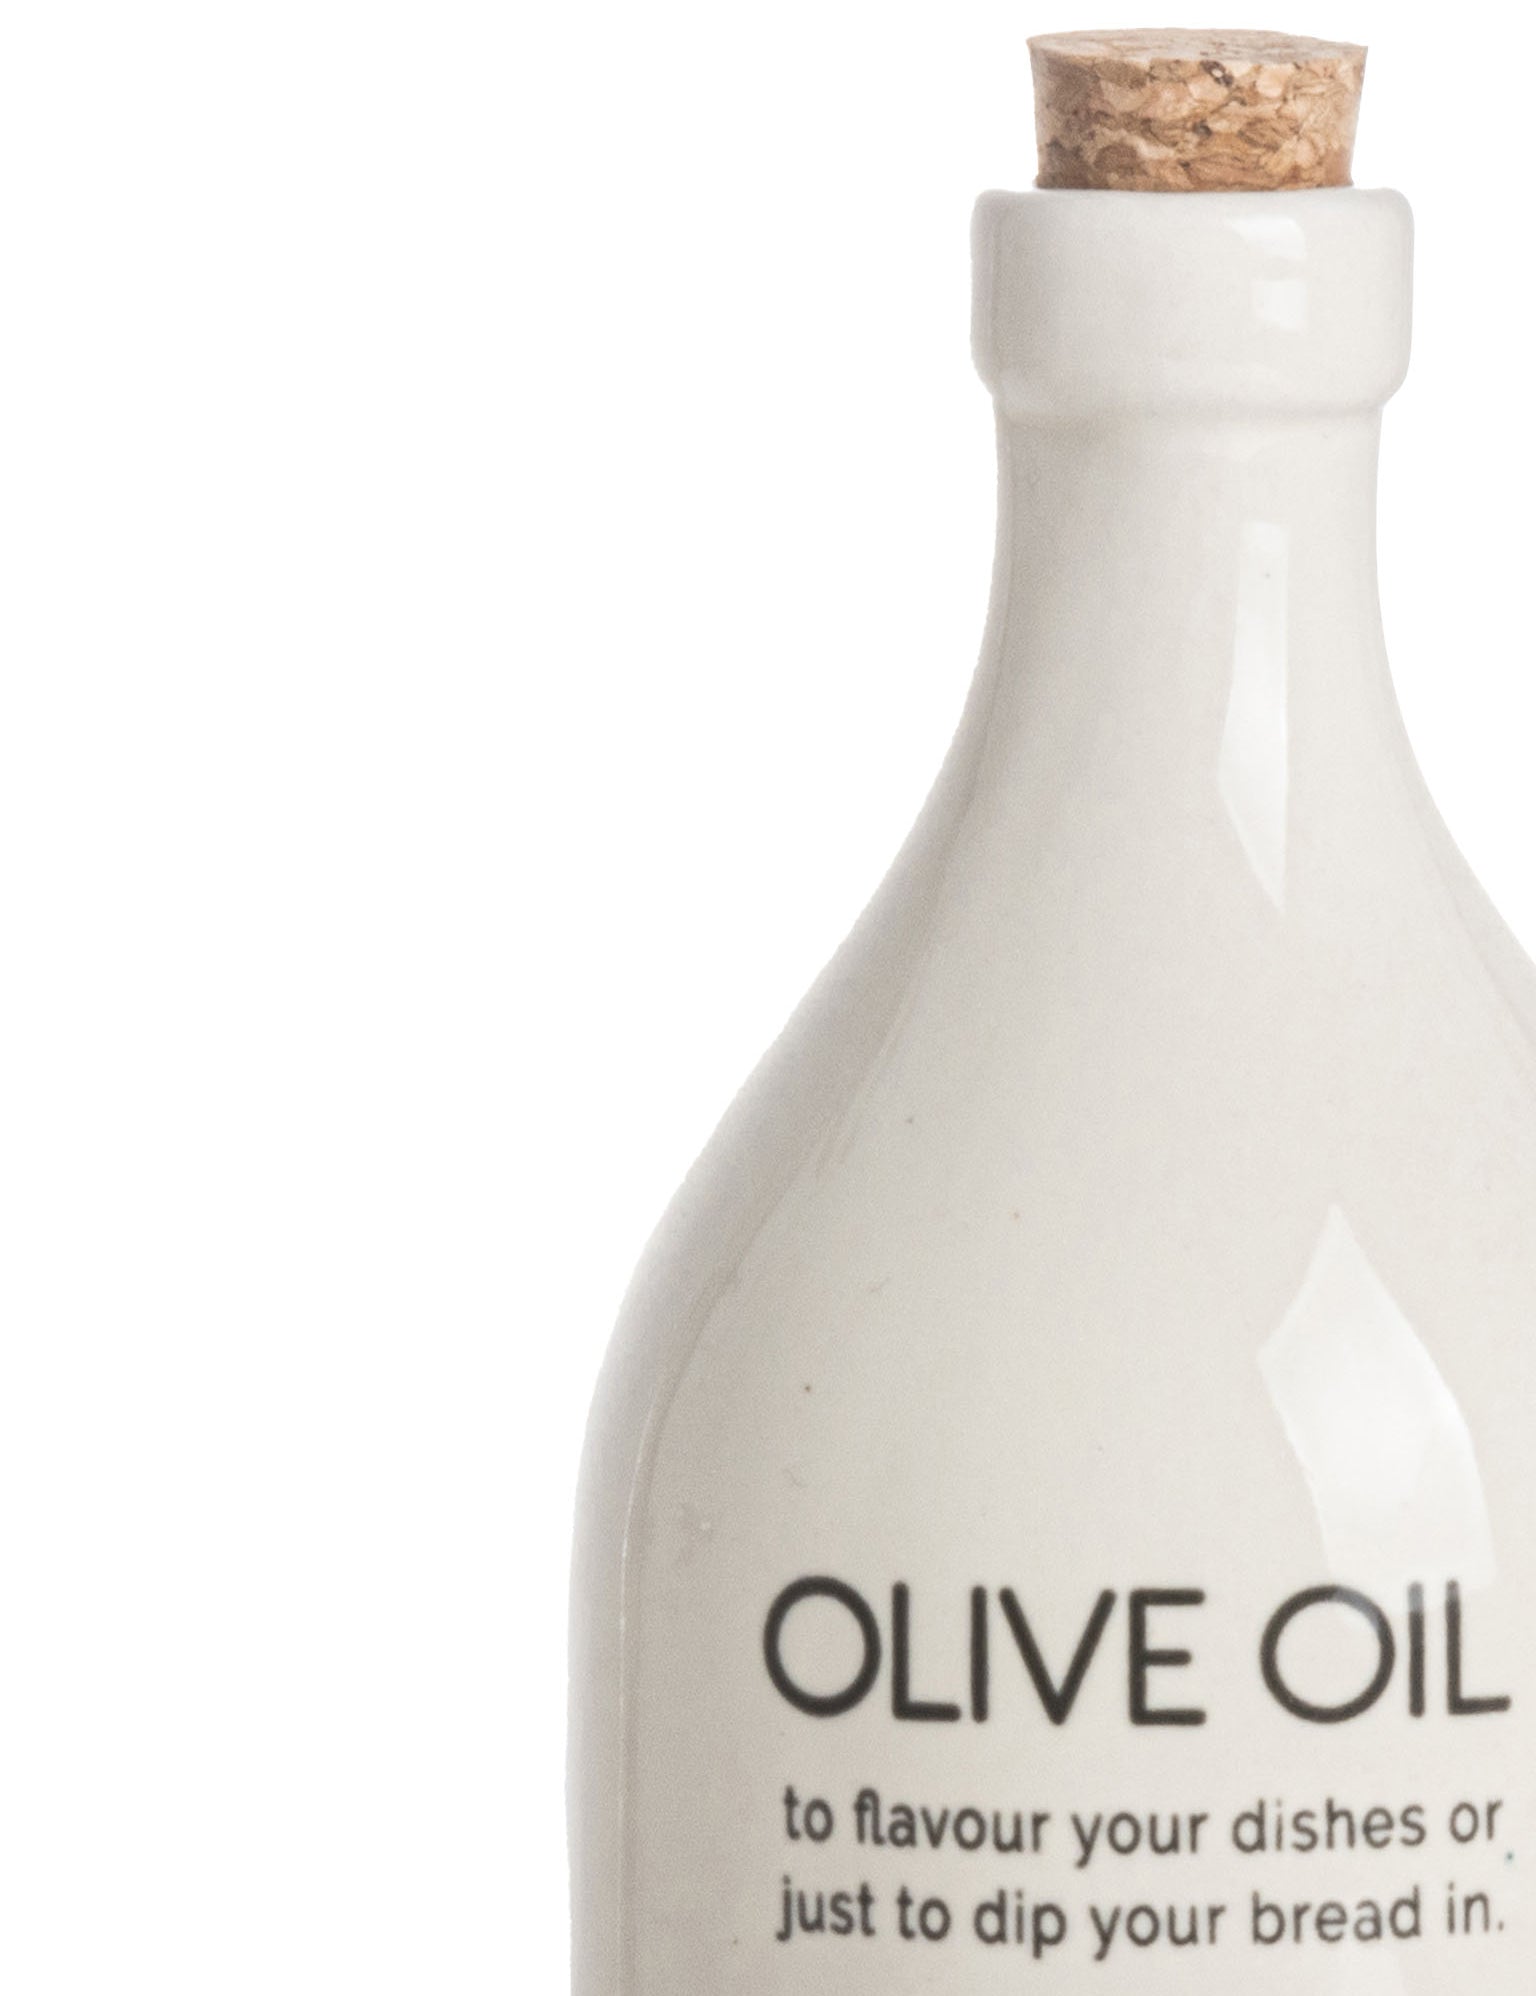 Olive Oil and Vinegar Bottles with cork tops